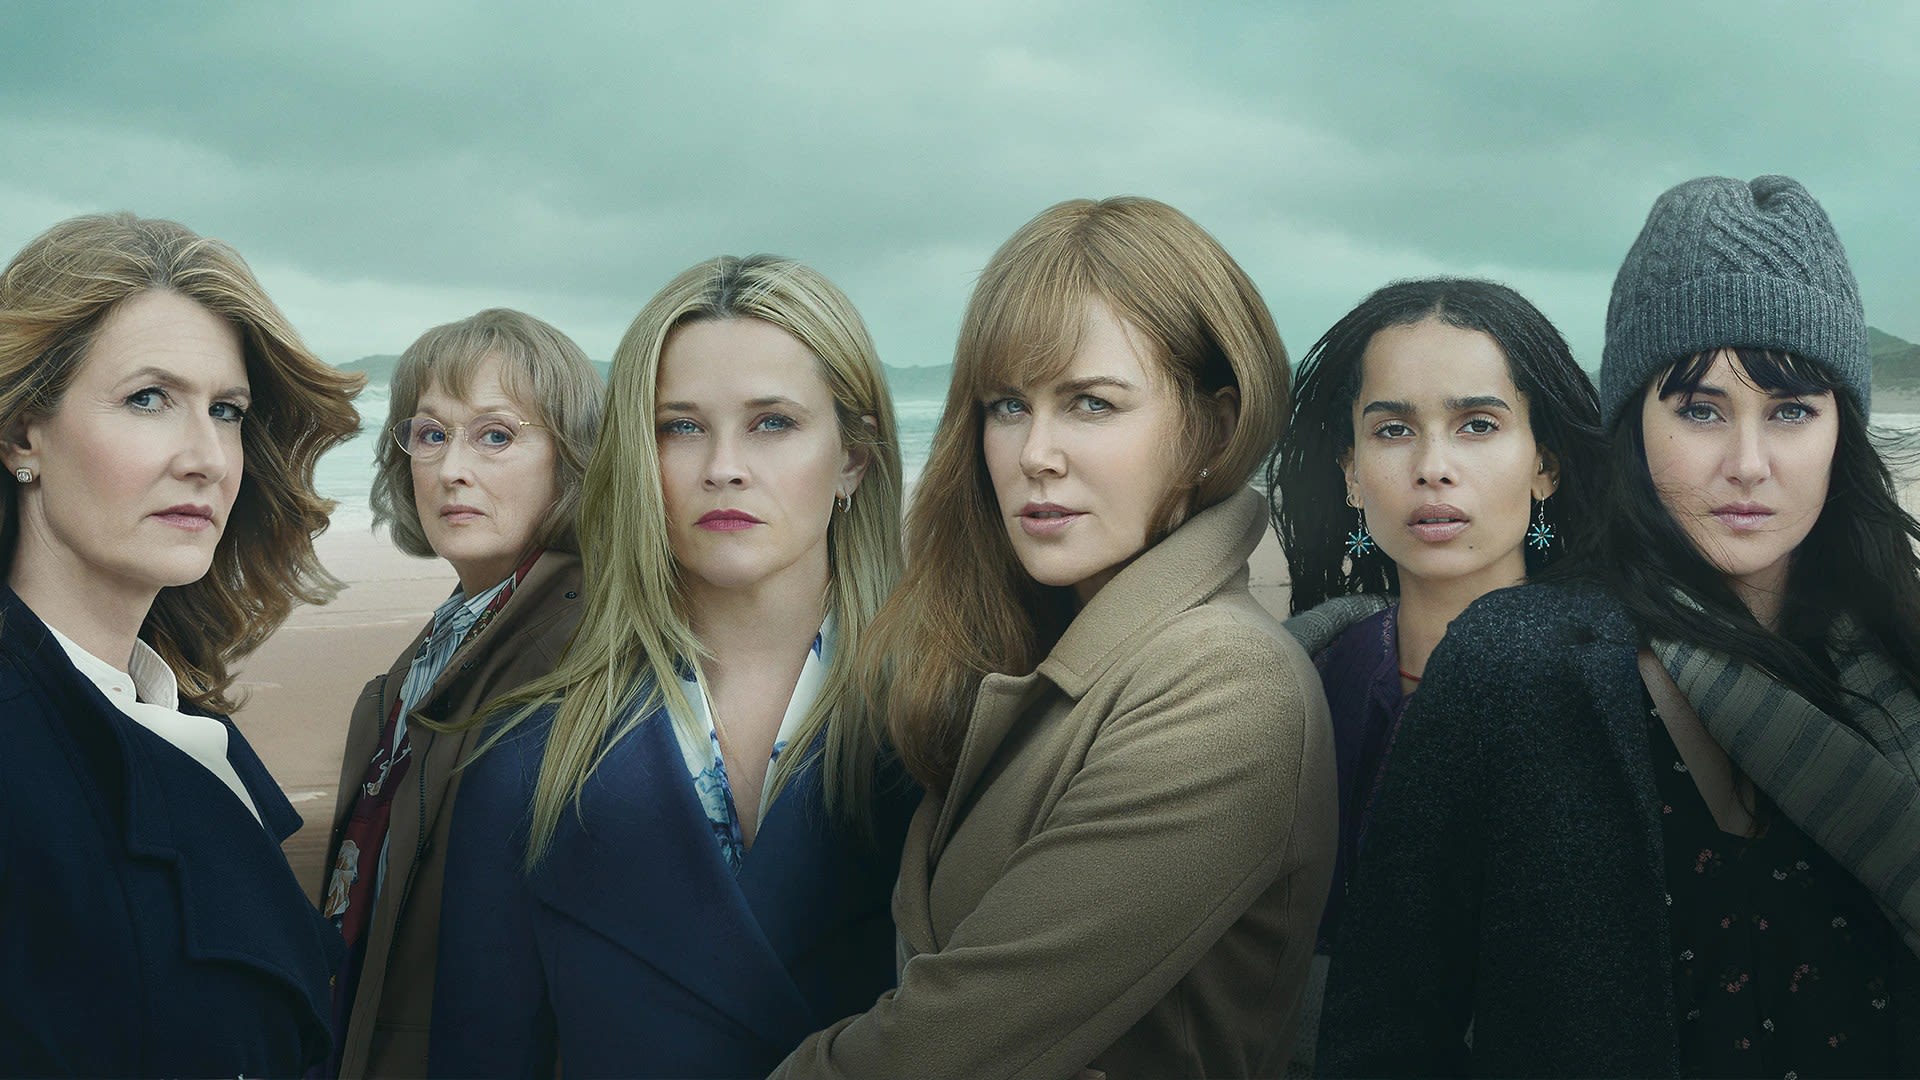 Nicole Kidman Says ‘Big Little Lies’ Season 3 Is in ‘Good Shape’ and Moving Ahead ‘Fast and Furious’: Author Liane...